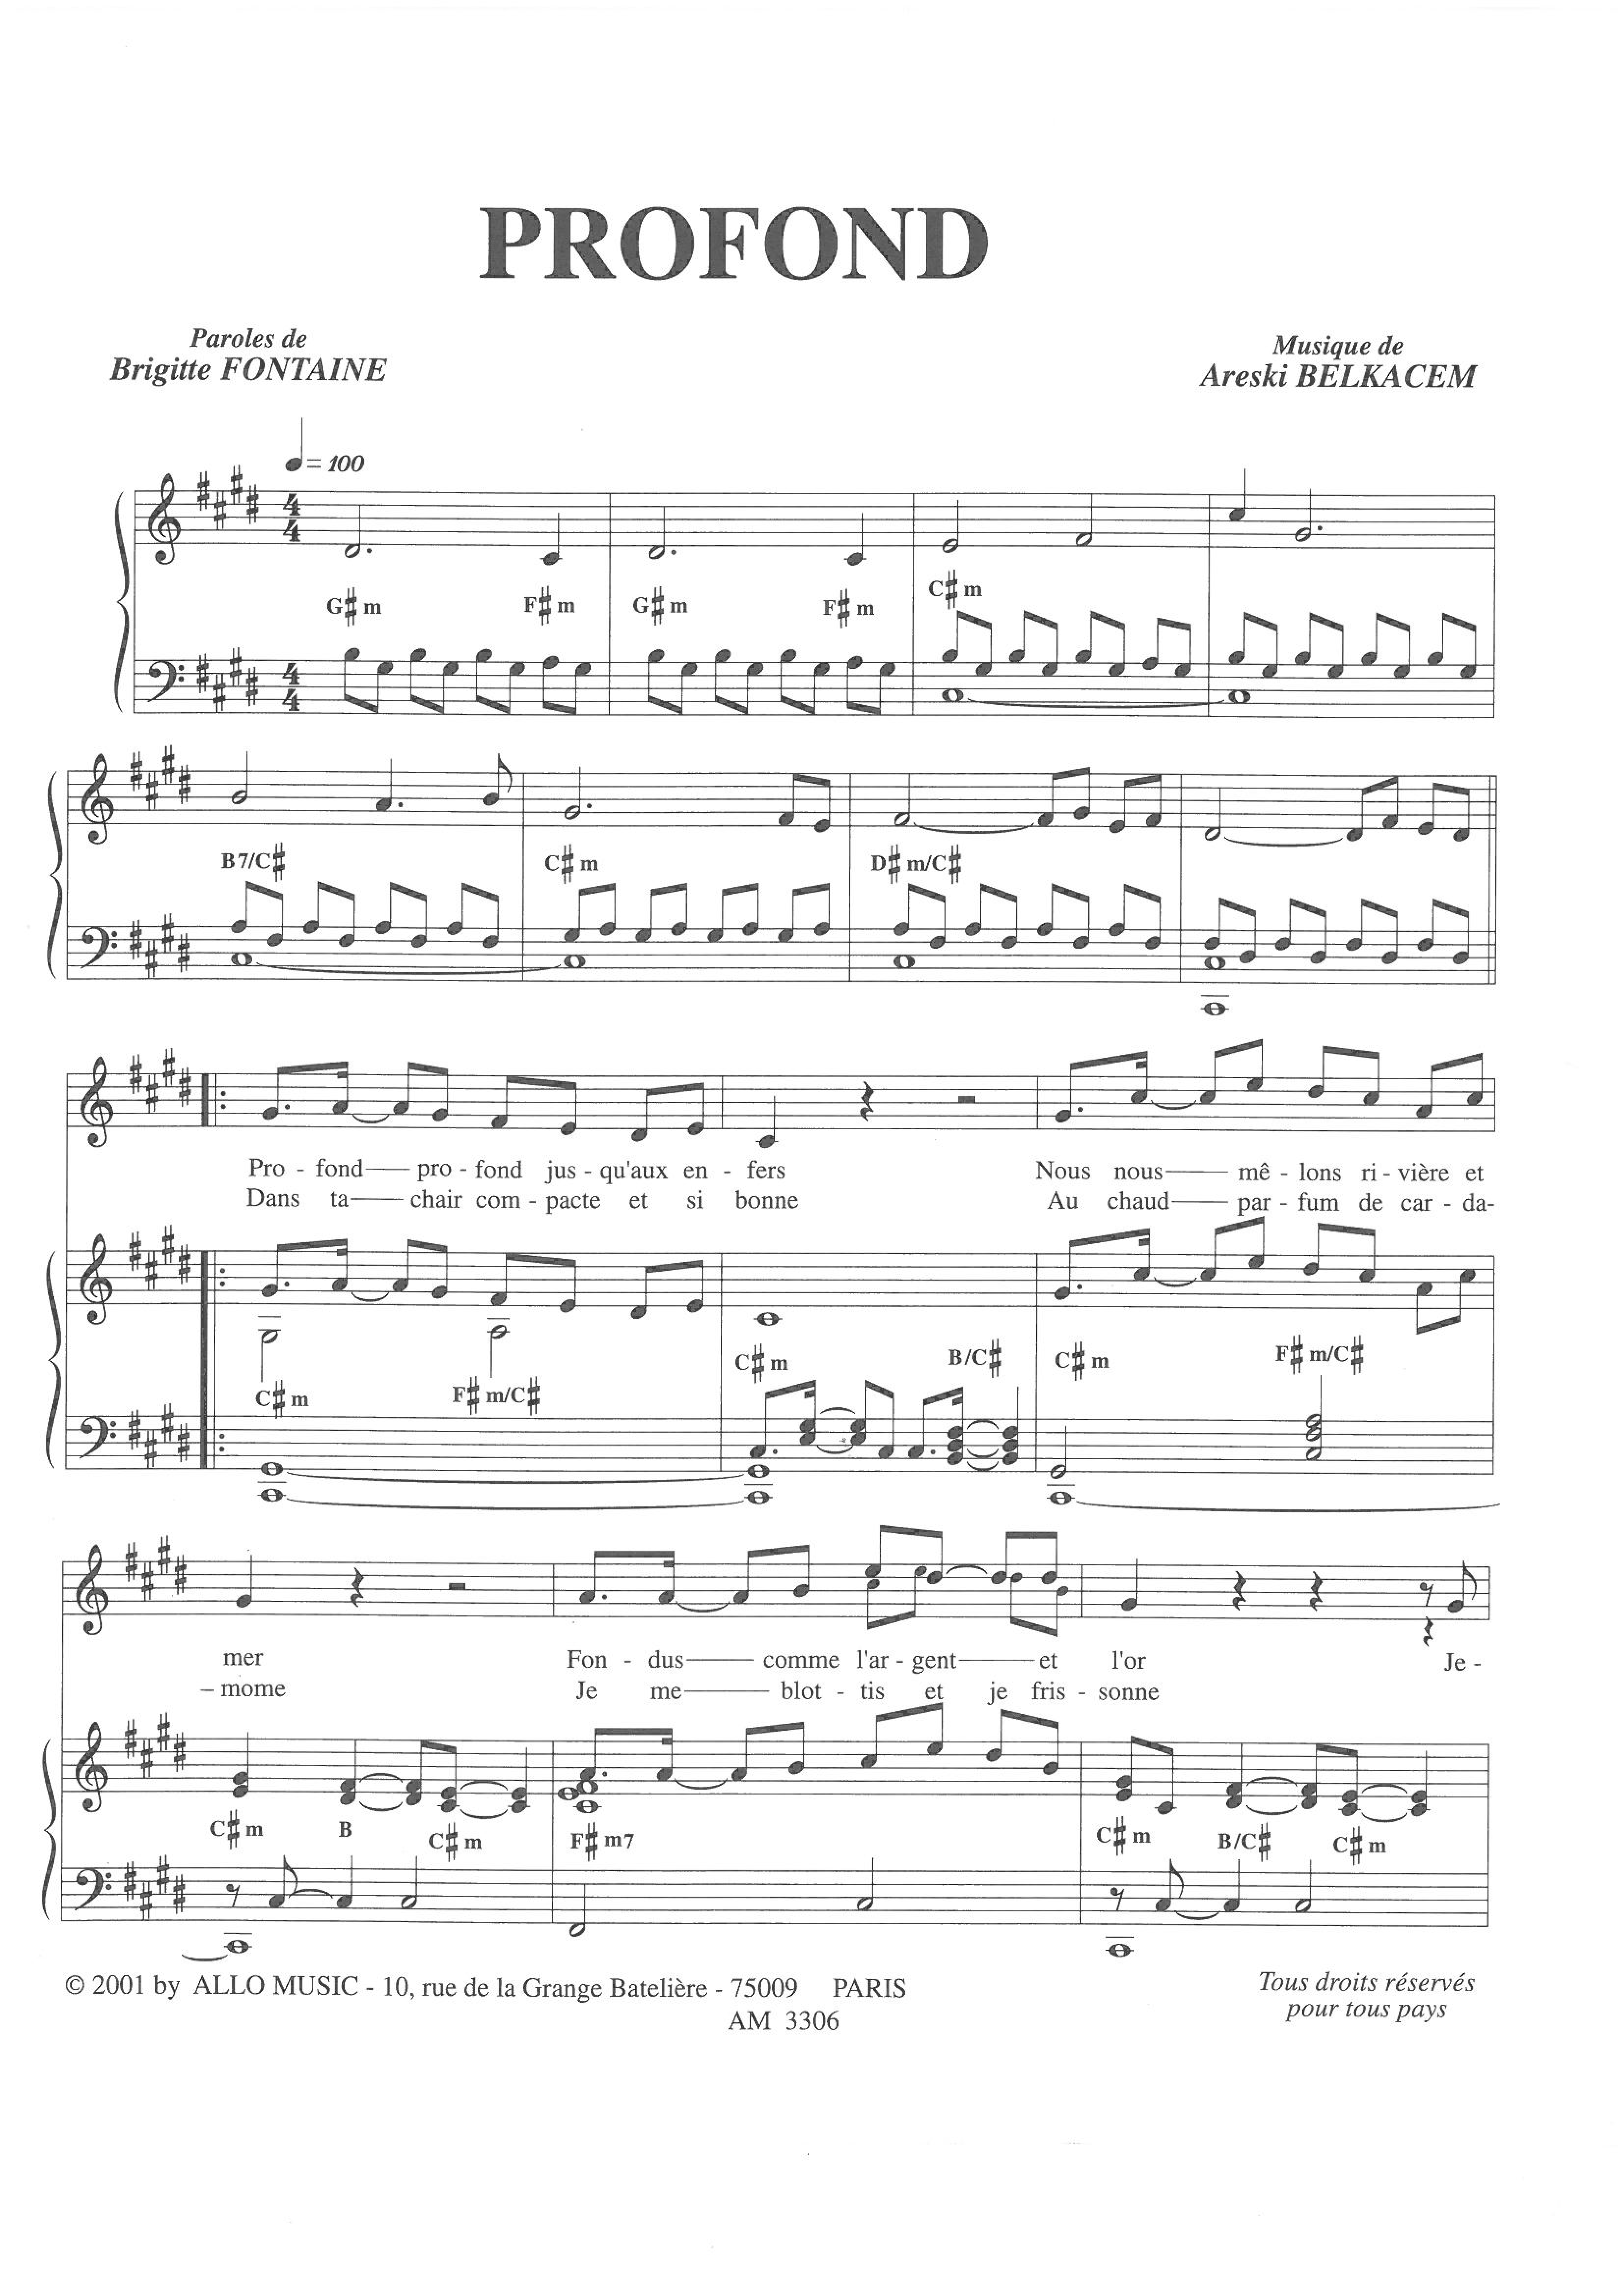 Brigitte Fontaine & Areski Belkacem Profond Sheet Music Notes & Chords for Piano & Vocal - Download or Print PDF